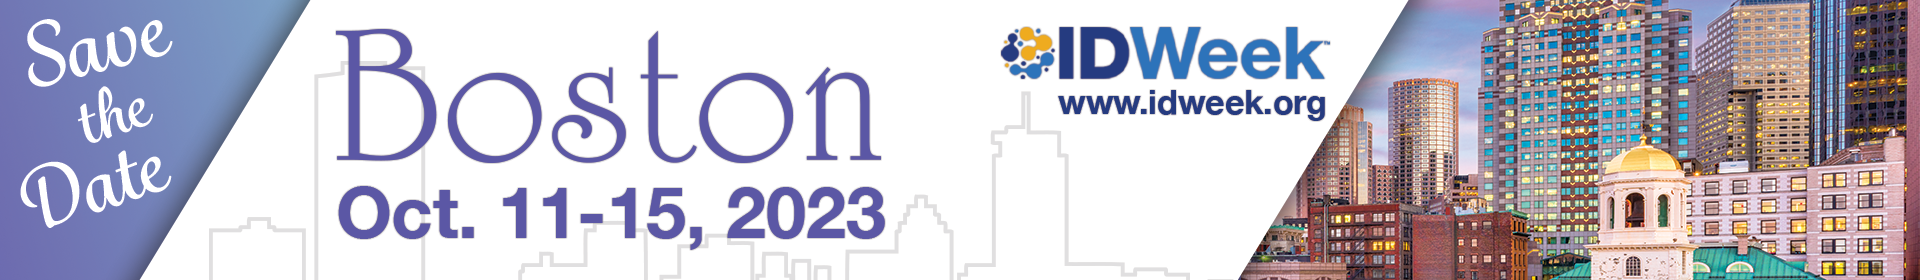 IDWeek 2023 Event Banner